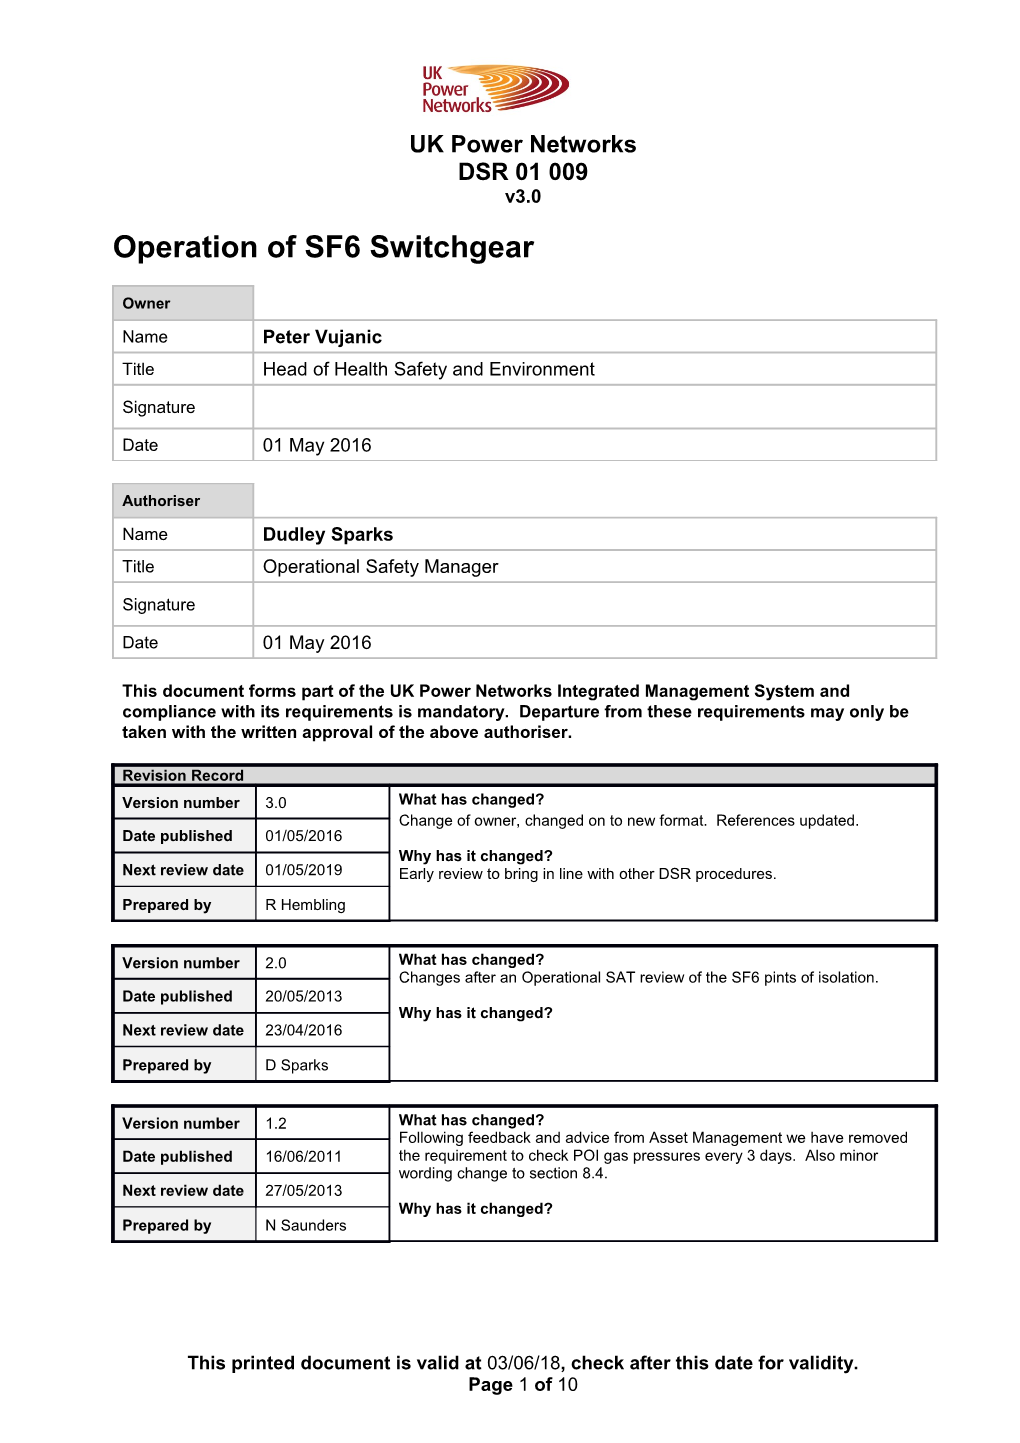 DSR 01 009 Operation of SF6 Switchgear